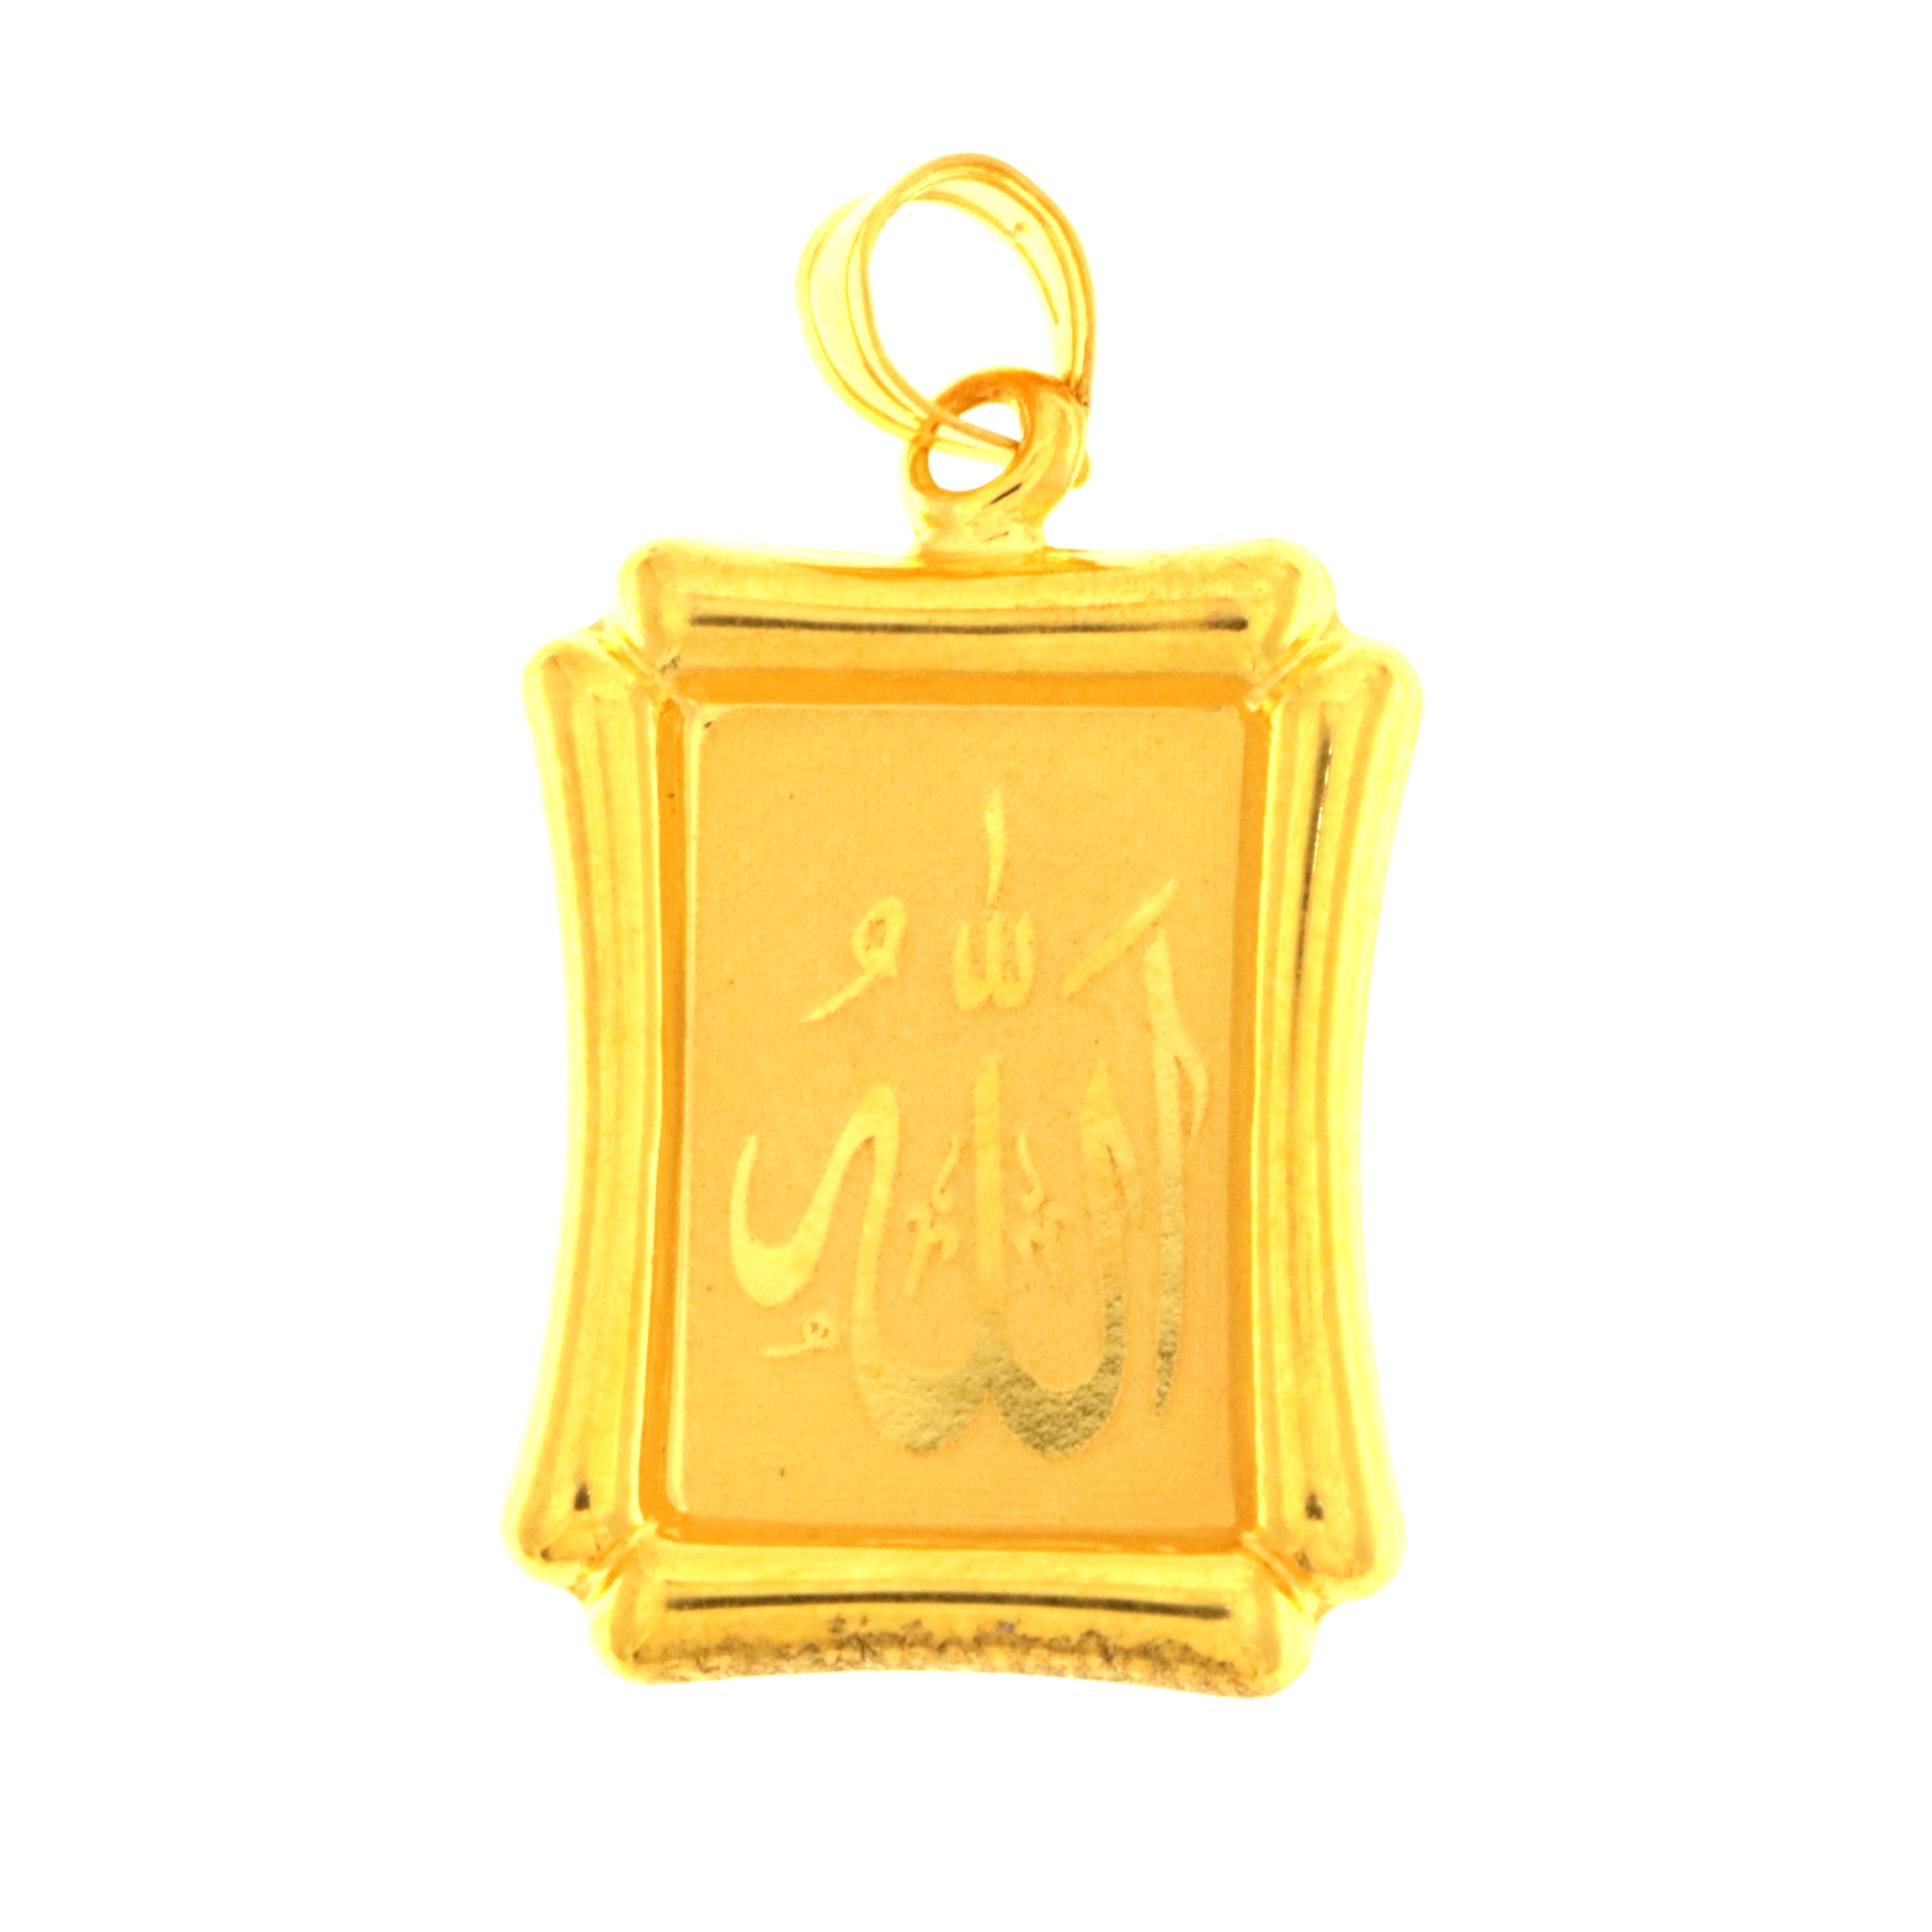 22ct Gold "Allah" Pendant